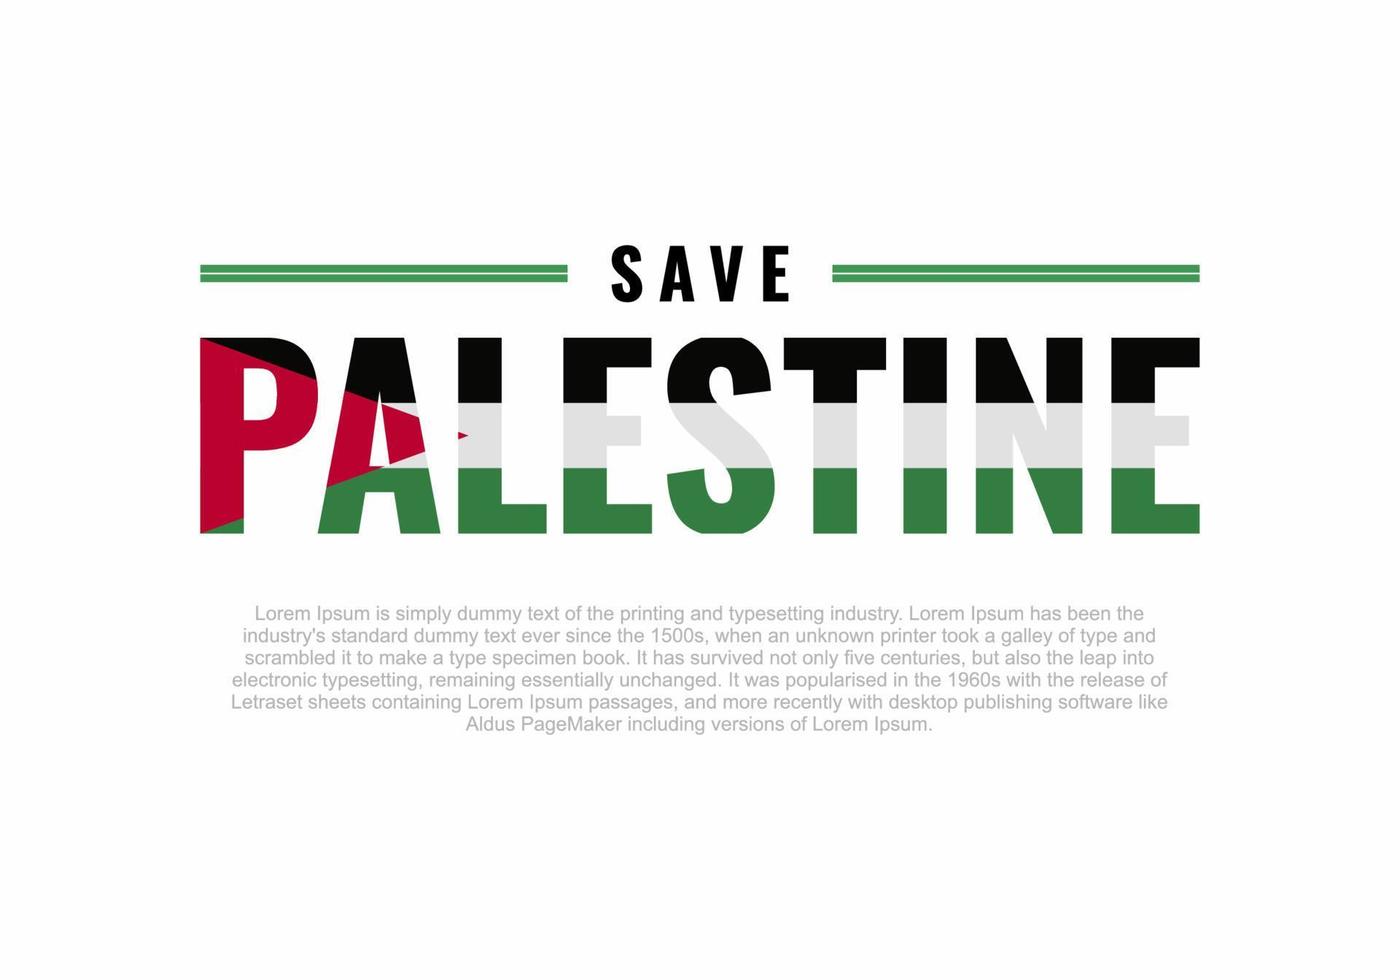 Save Palestine vector illustration background.